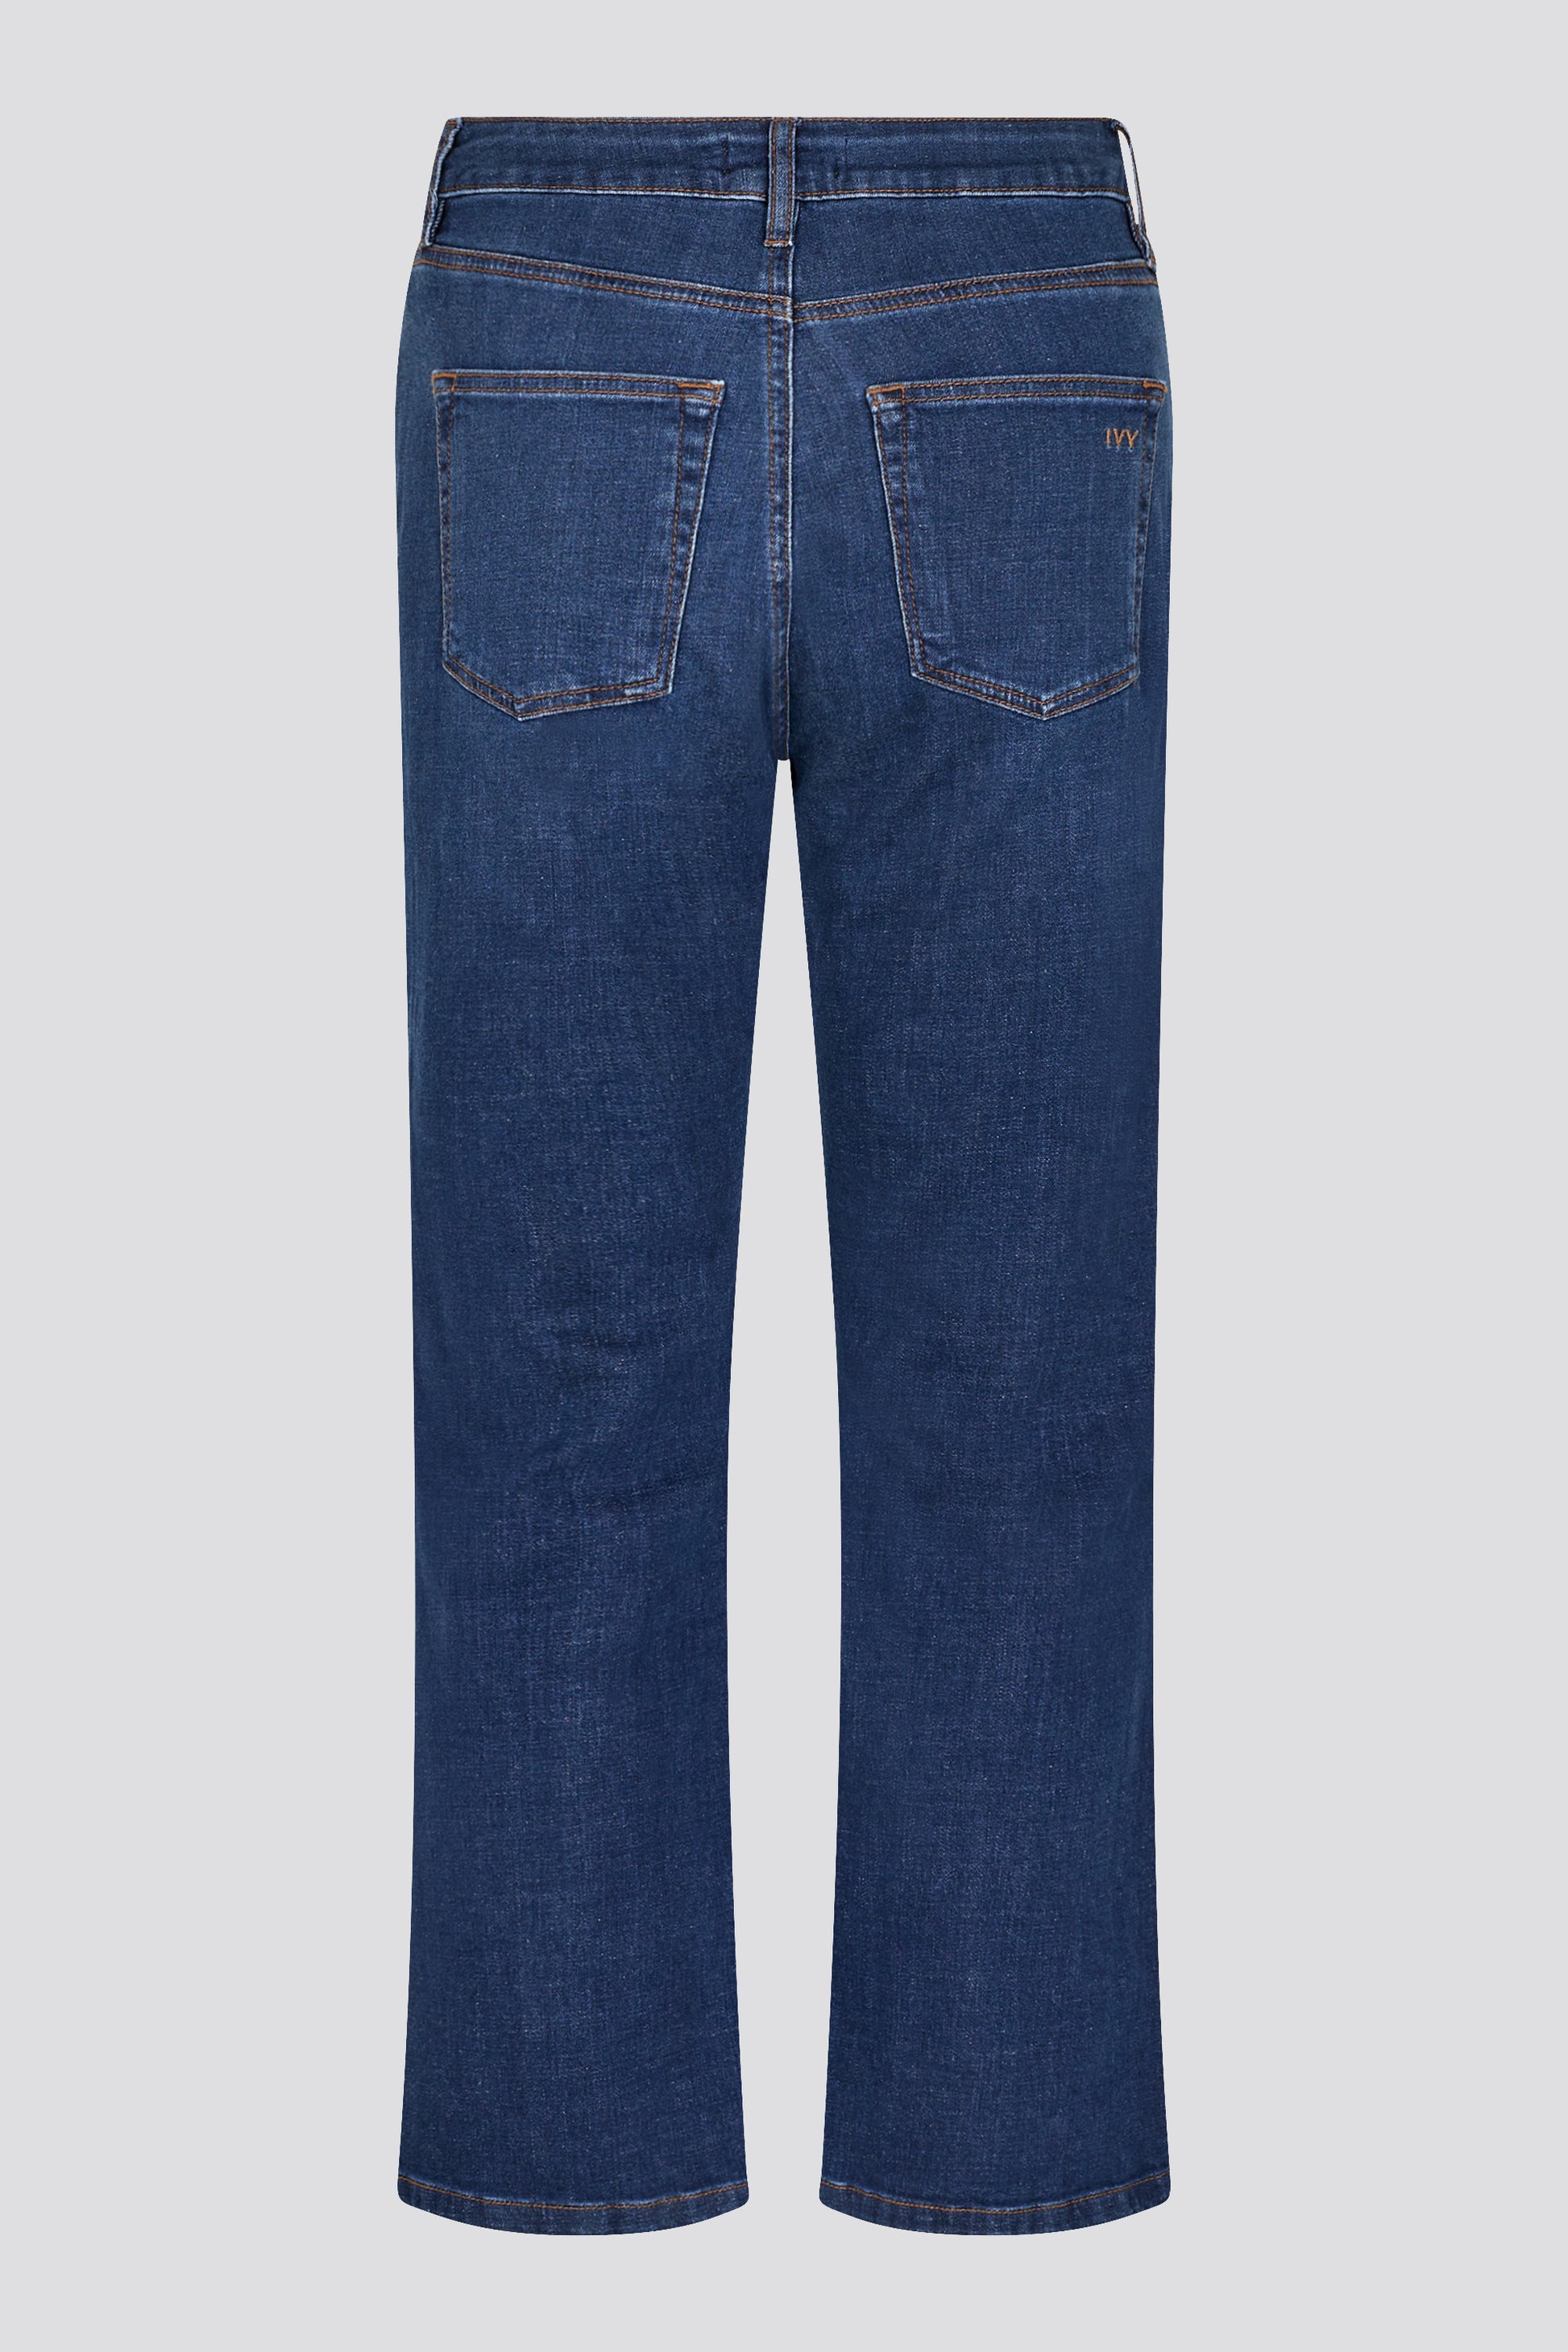 IVY Copenhagen IVY-Frida Earth Jeans Wash Super Silver Indigo Jeans & Pants 51 Denim Blue